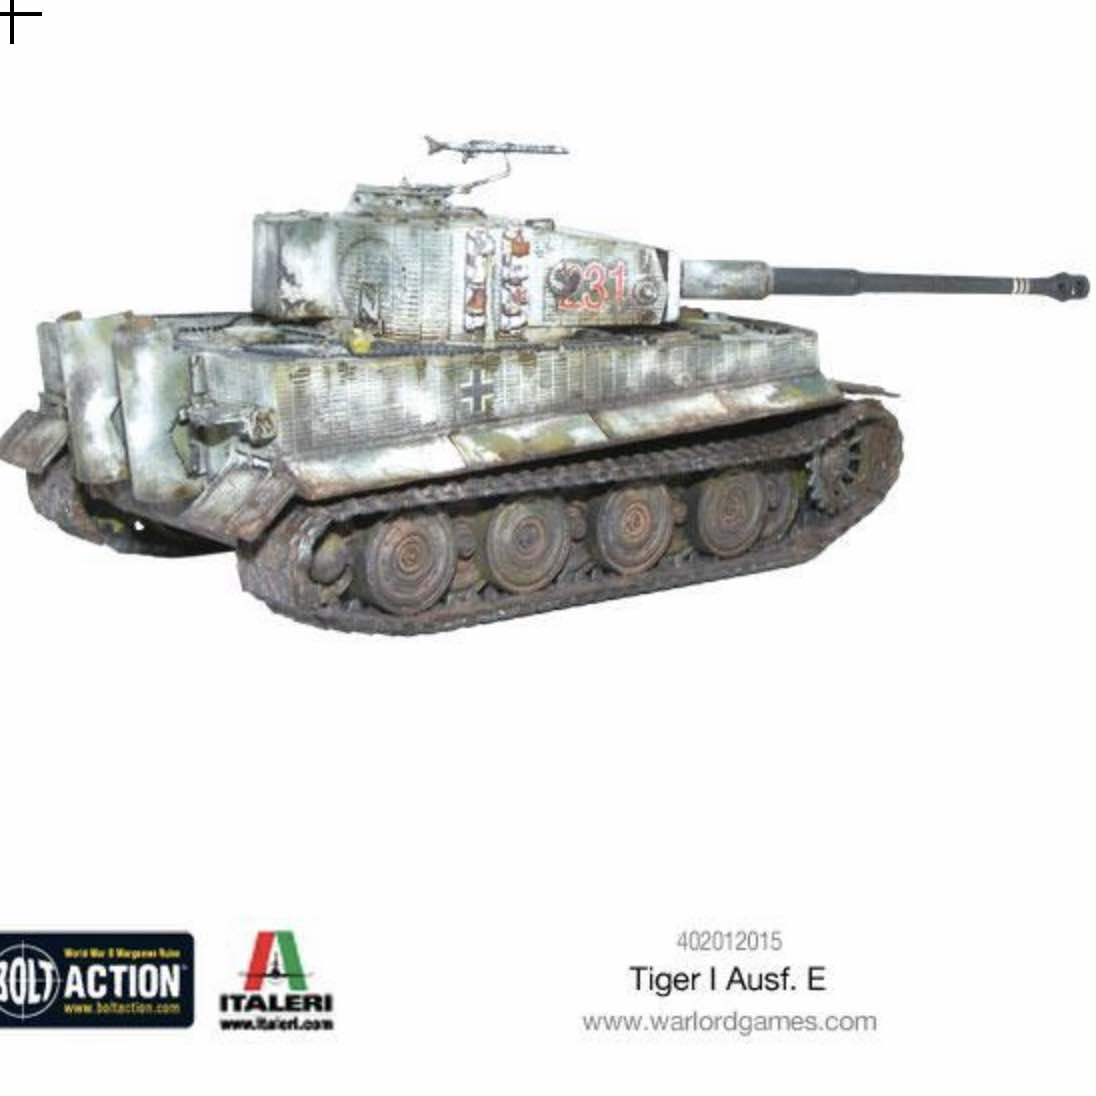 402012015 tiger I ausf E modelo_2_lateral